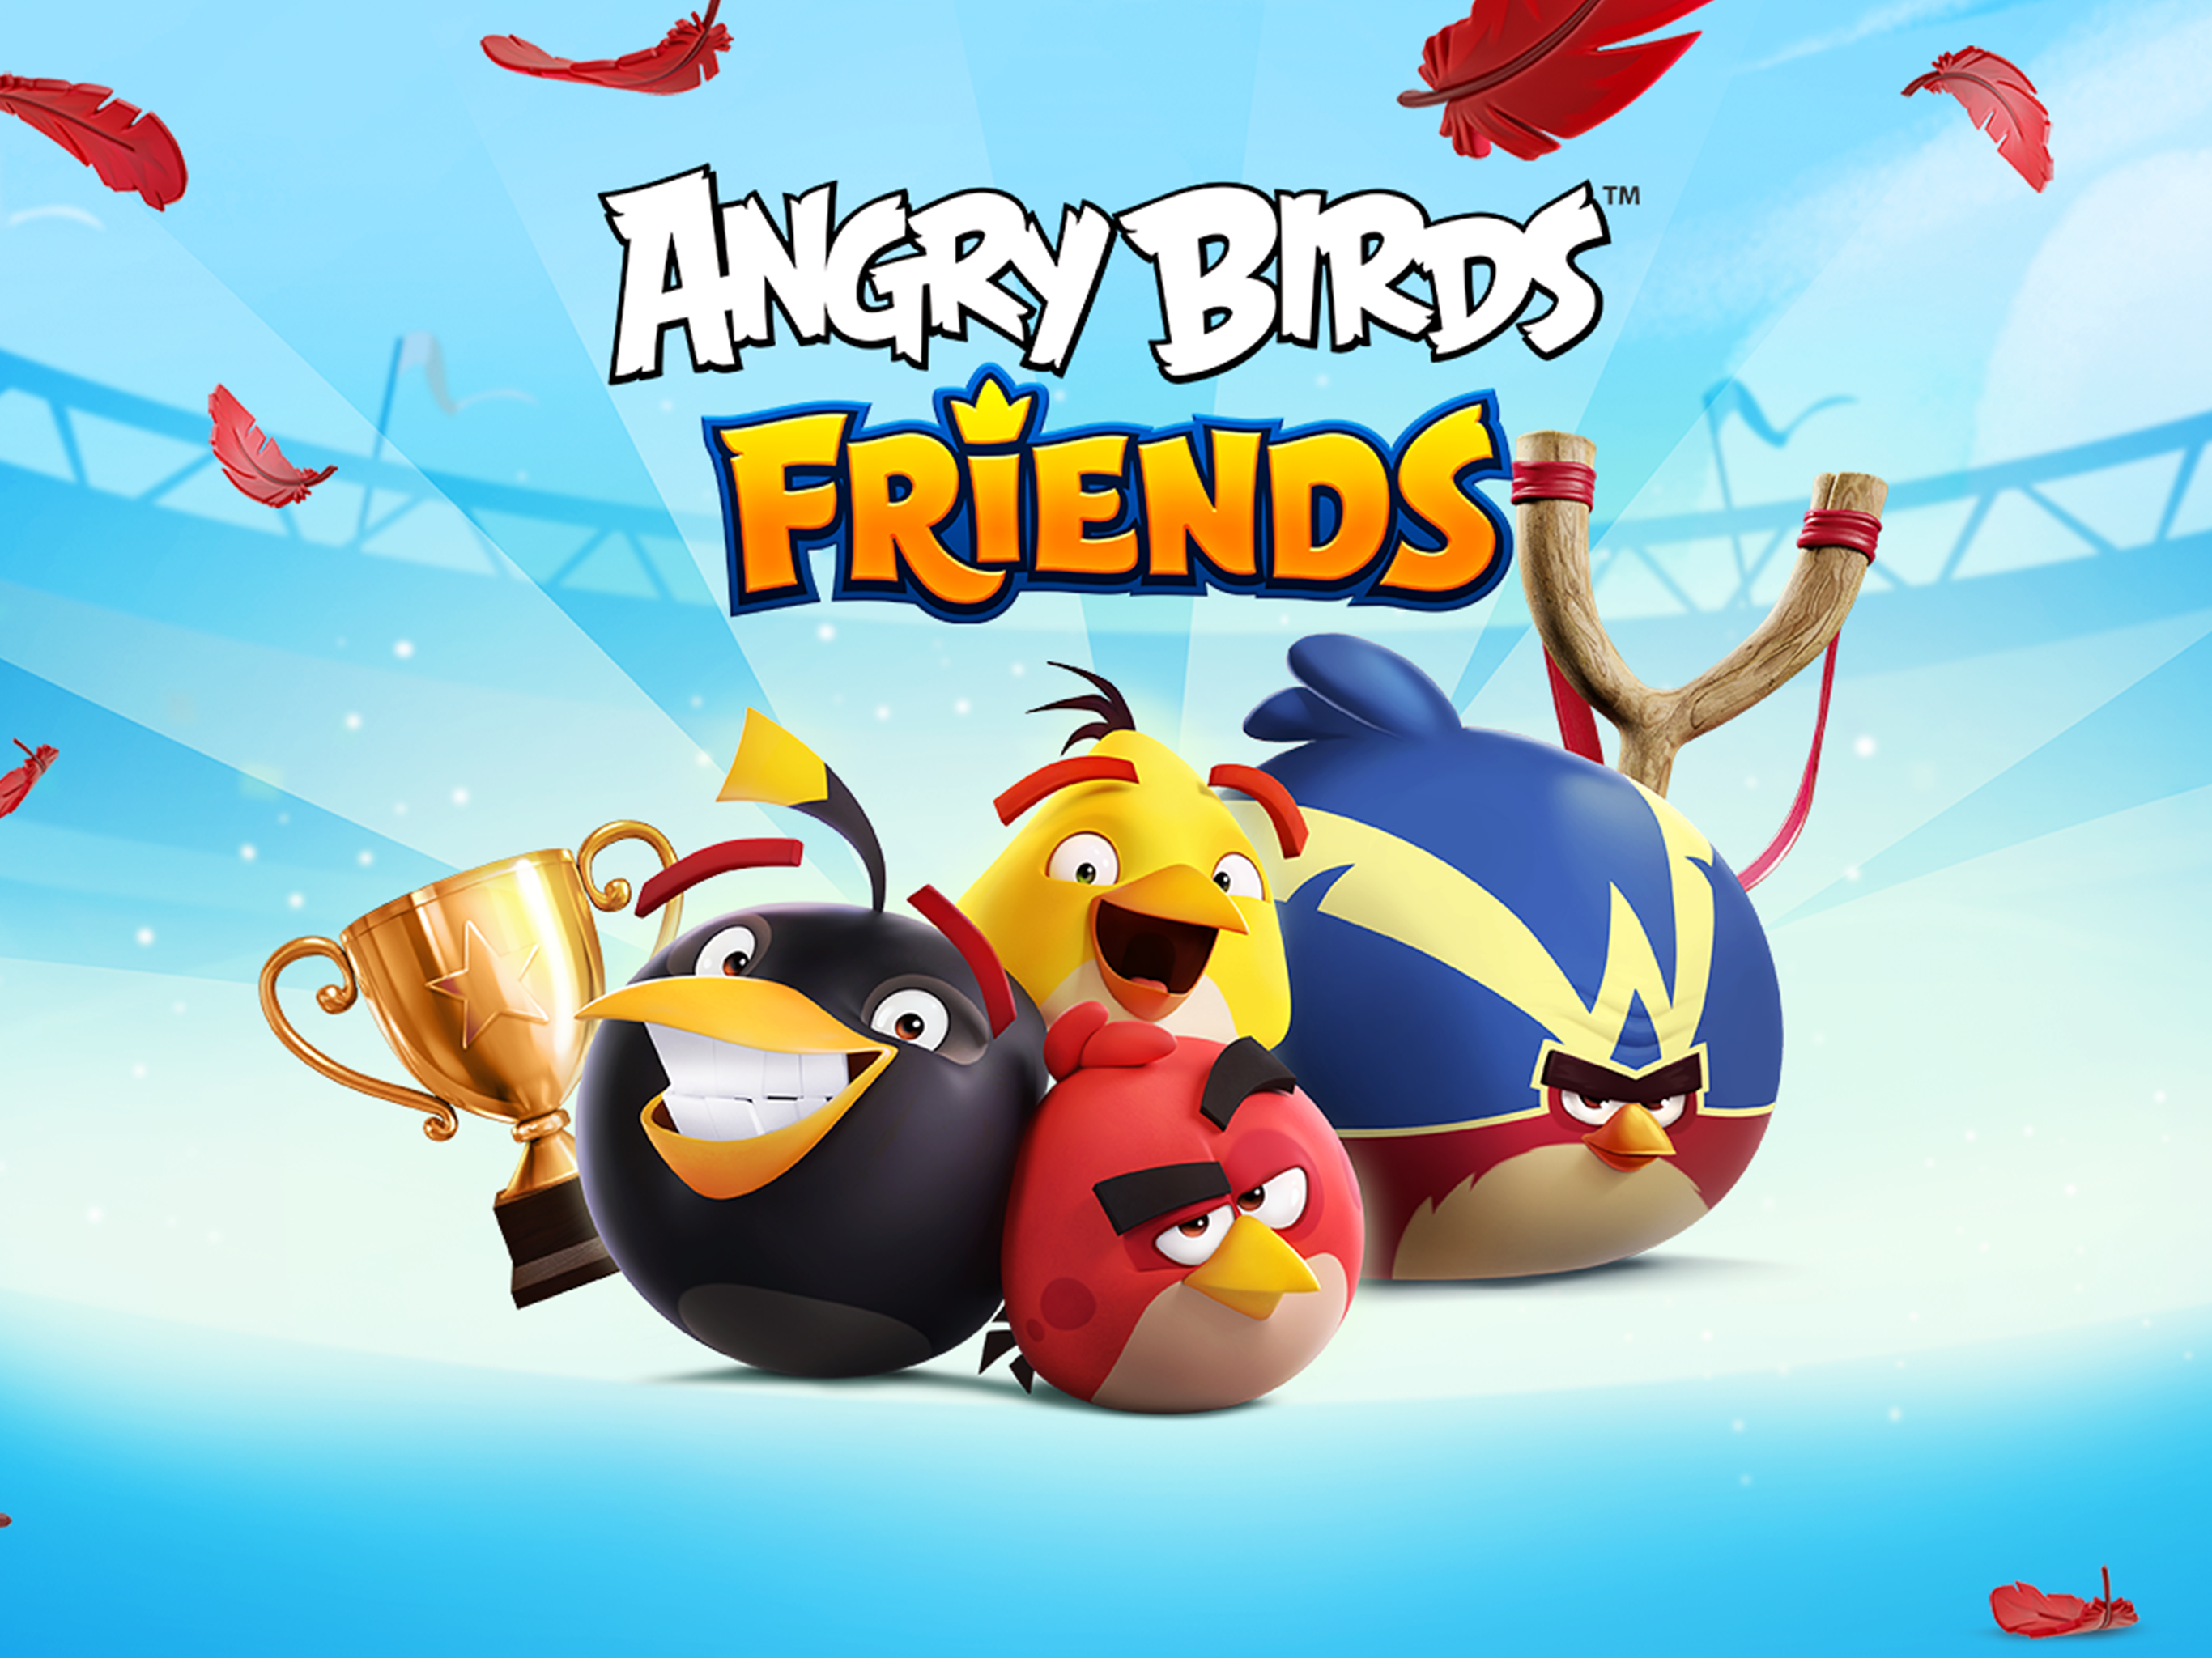 Angry Birds Friendsのキャプチャ